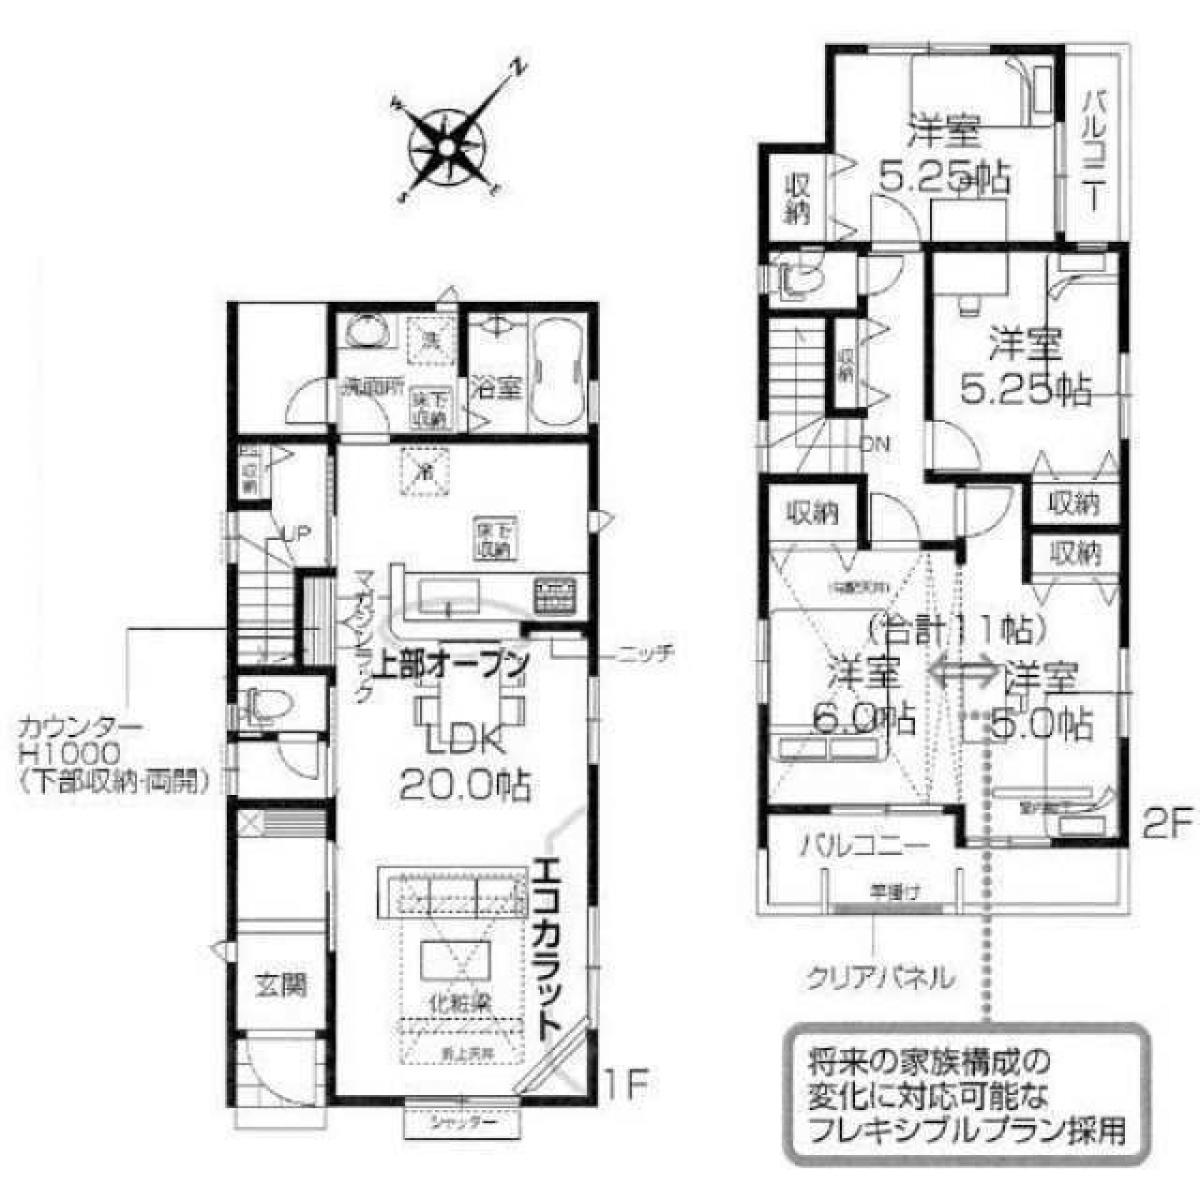 Picture of Home For Sale in Shiki Shi, Saitama, Japan